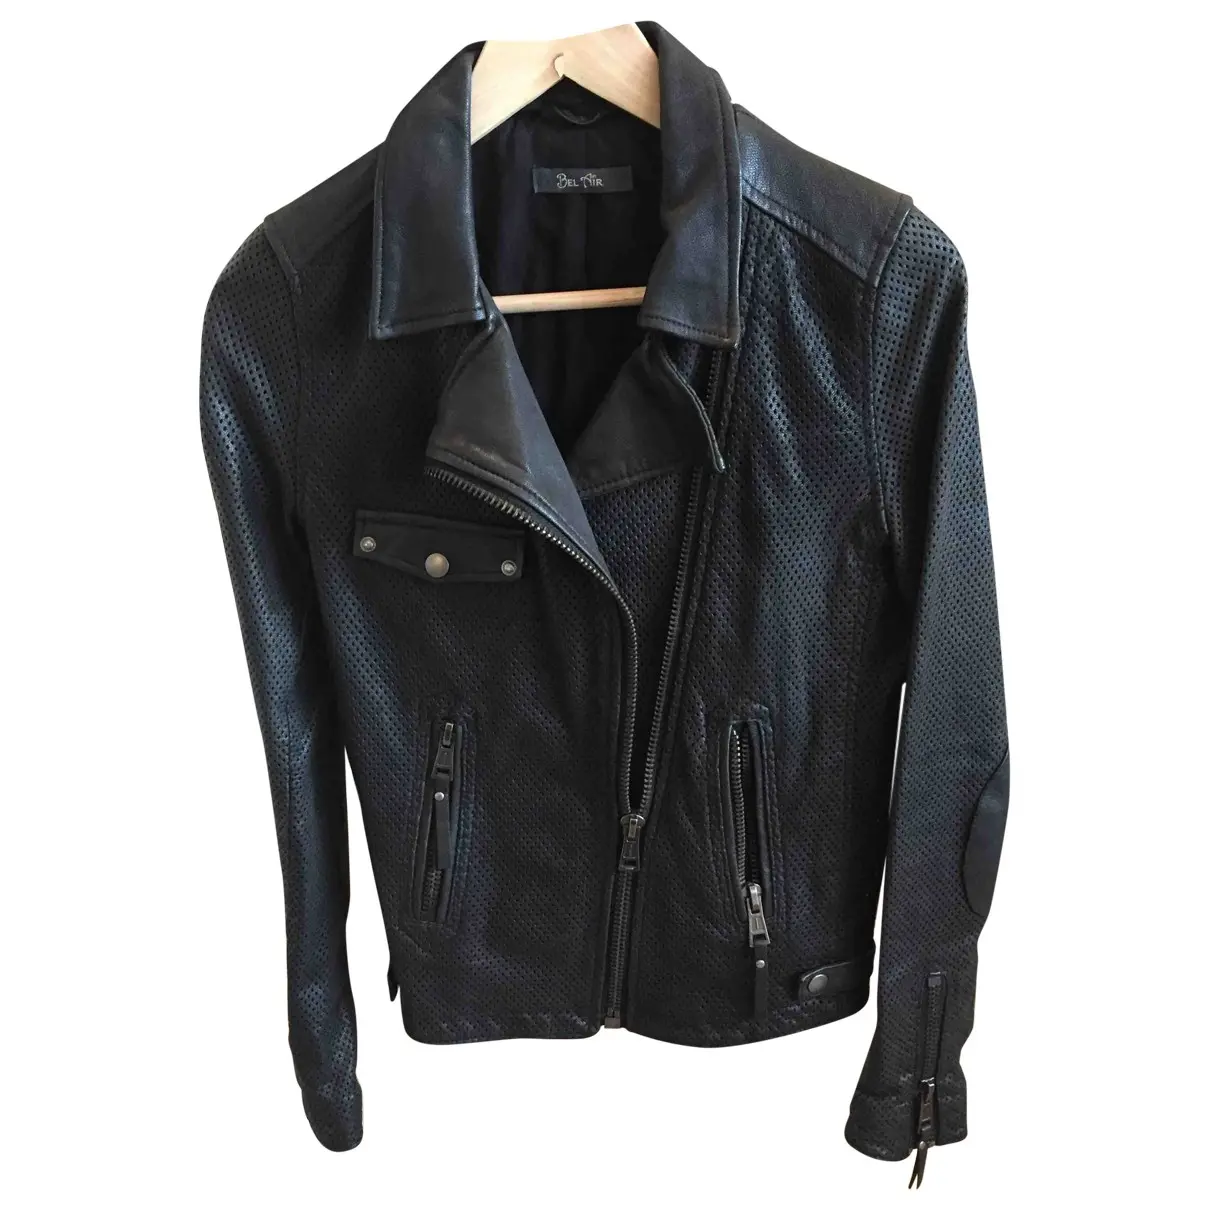 Leather jacket Bel Air